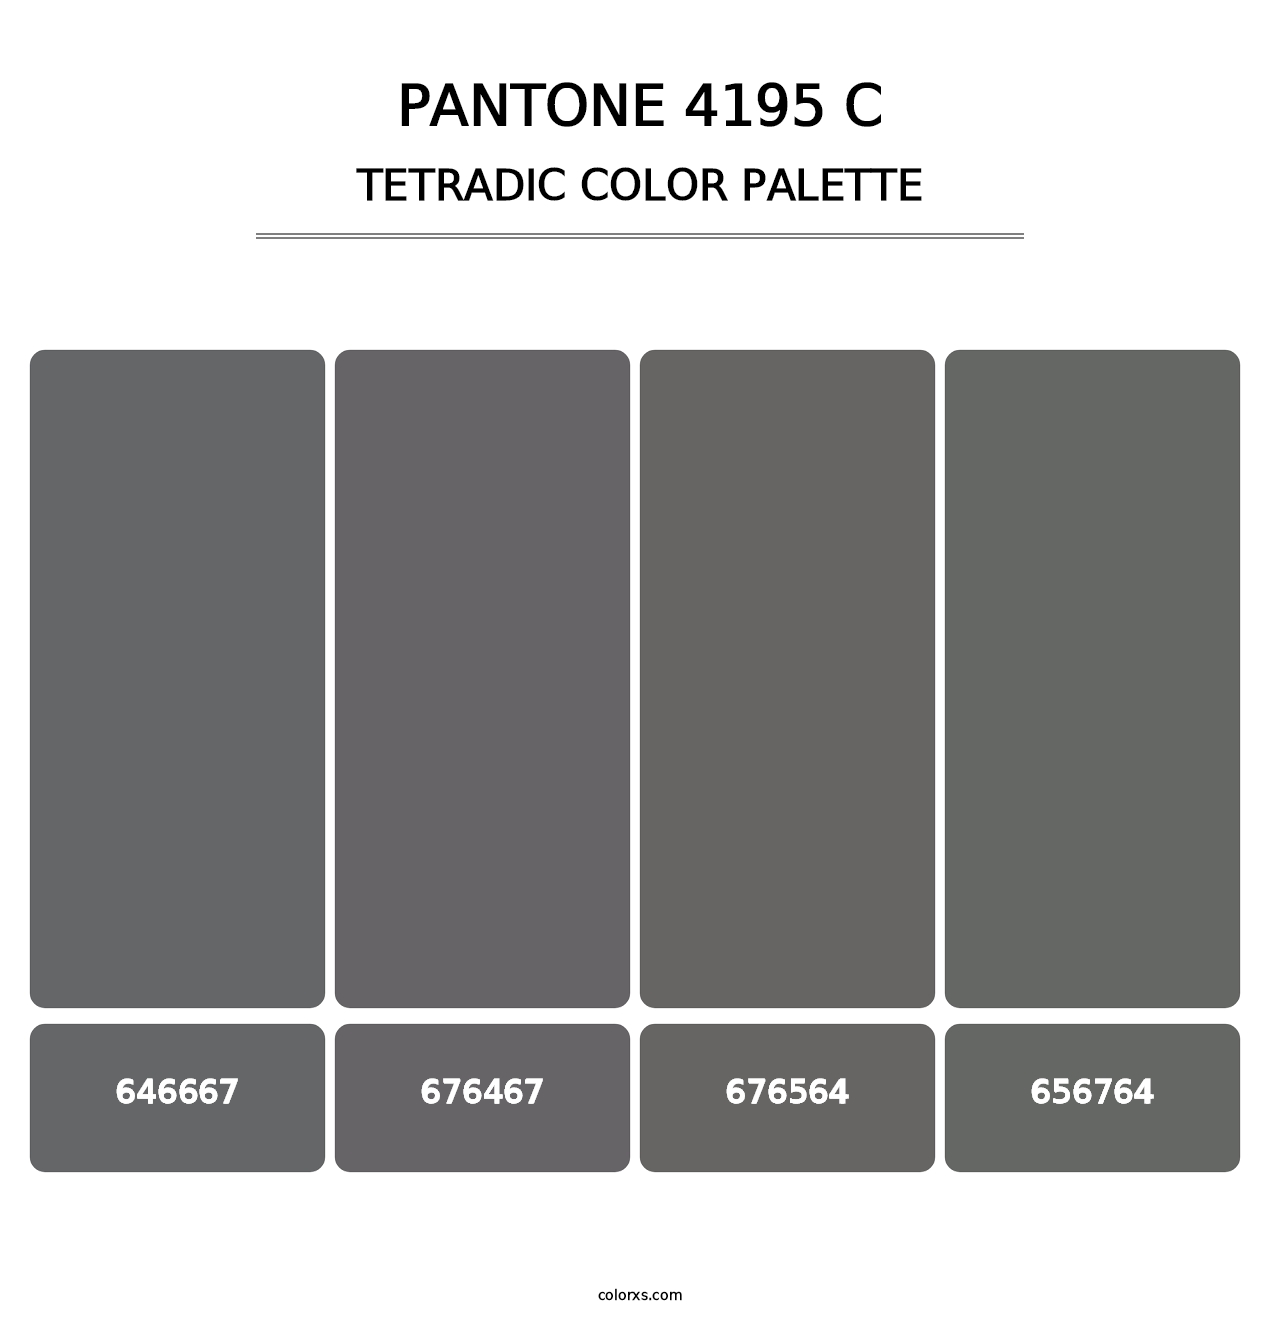 PANTONE 4195 C - Tetradic Color Palette